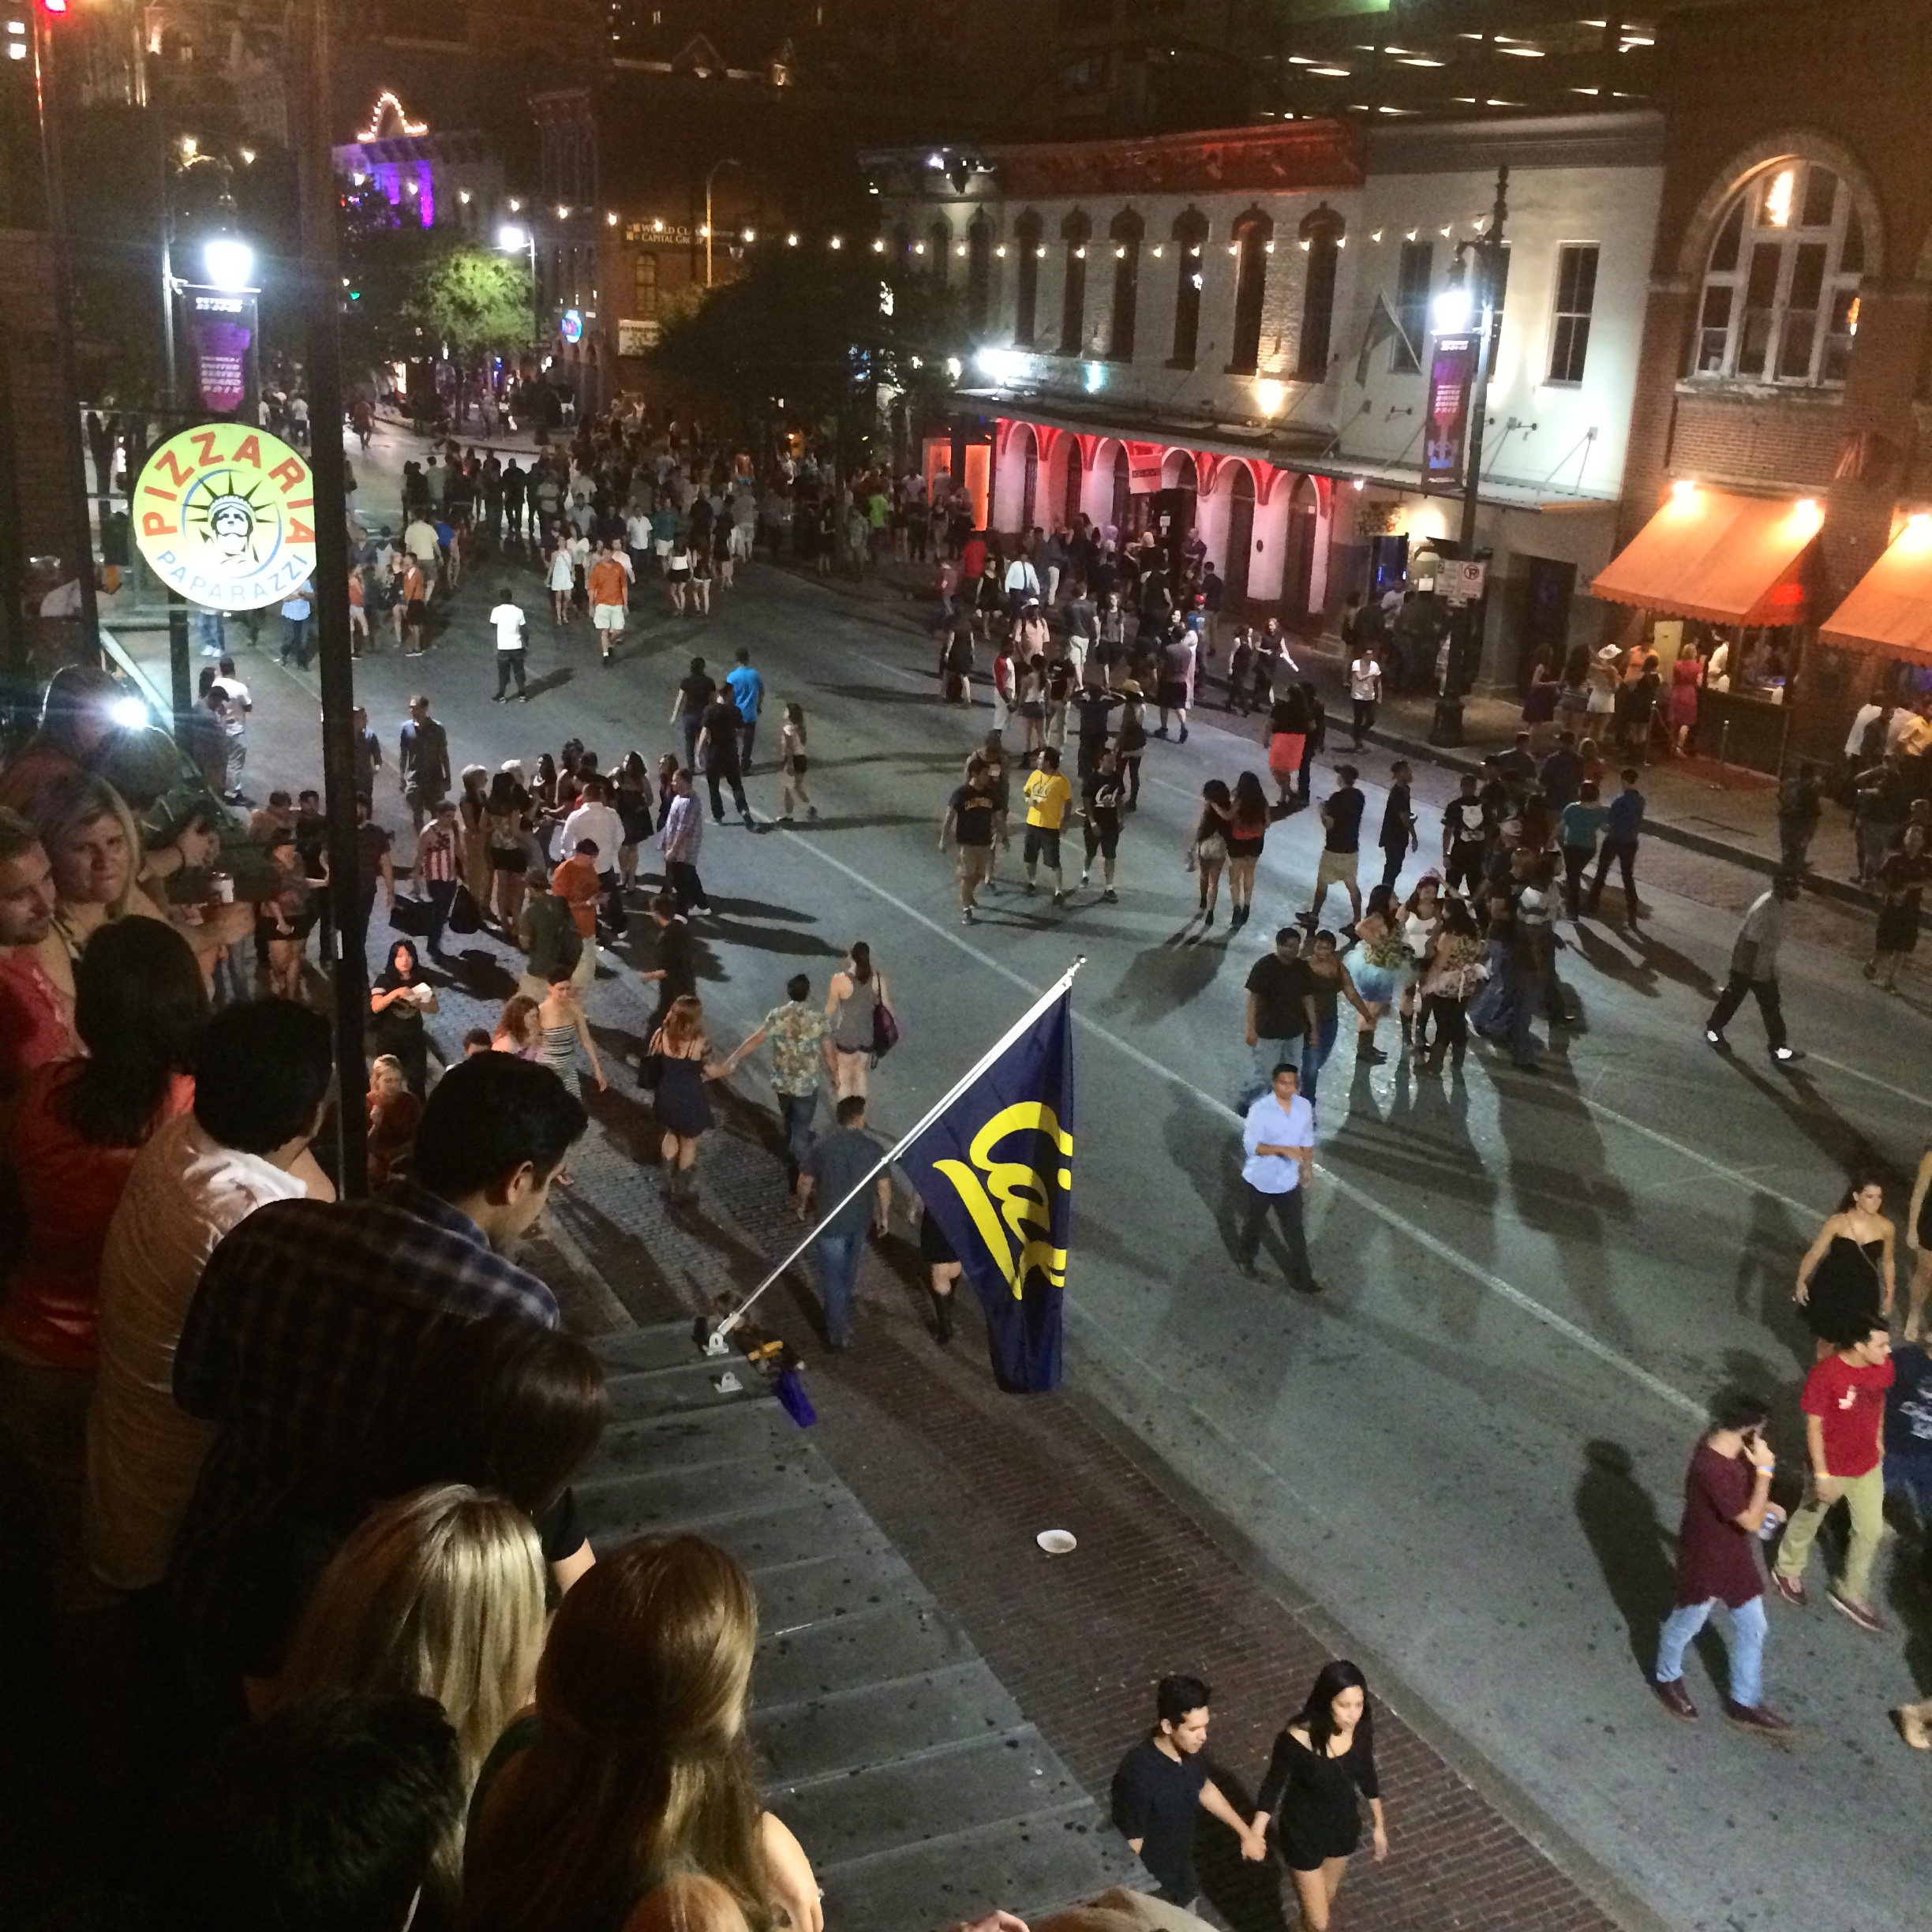 Party scene on Sixth Street in Austin, Texas